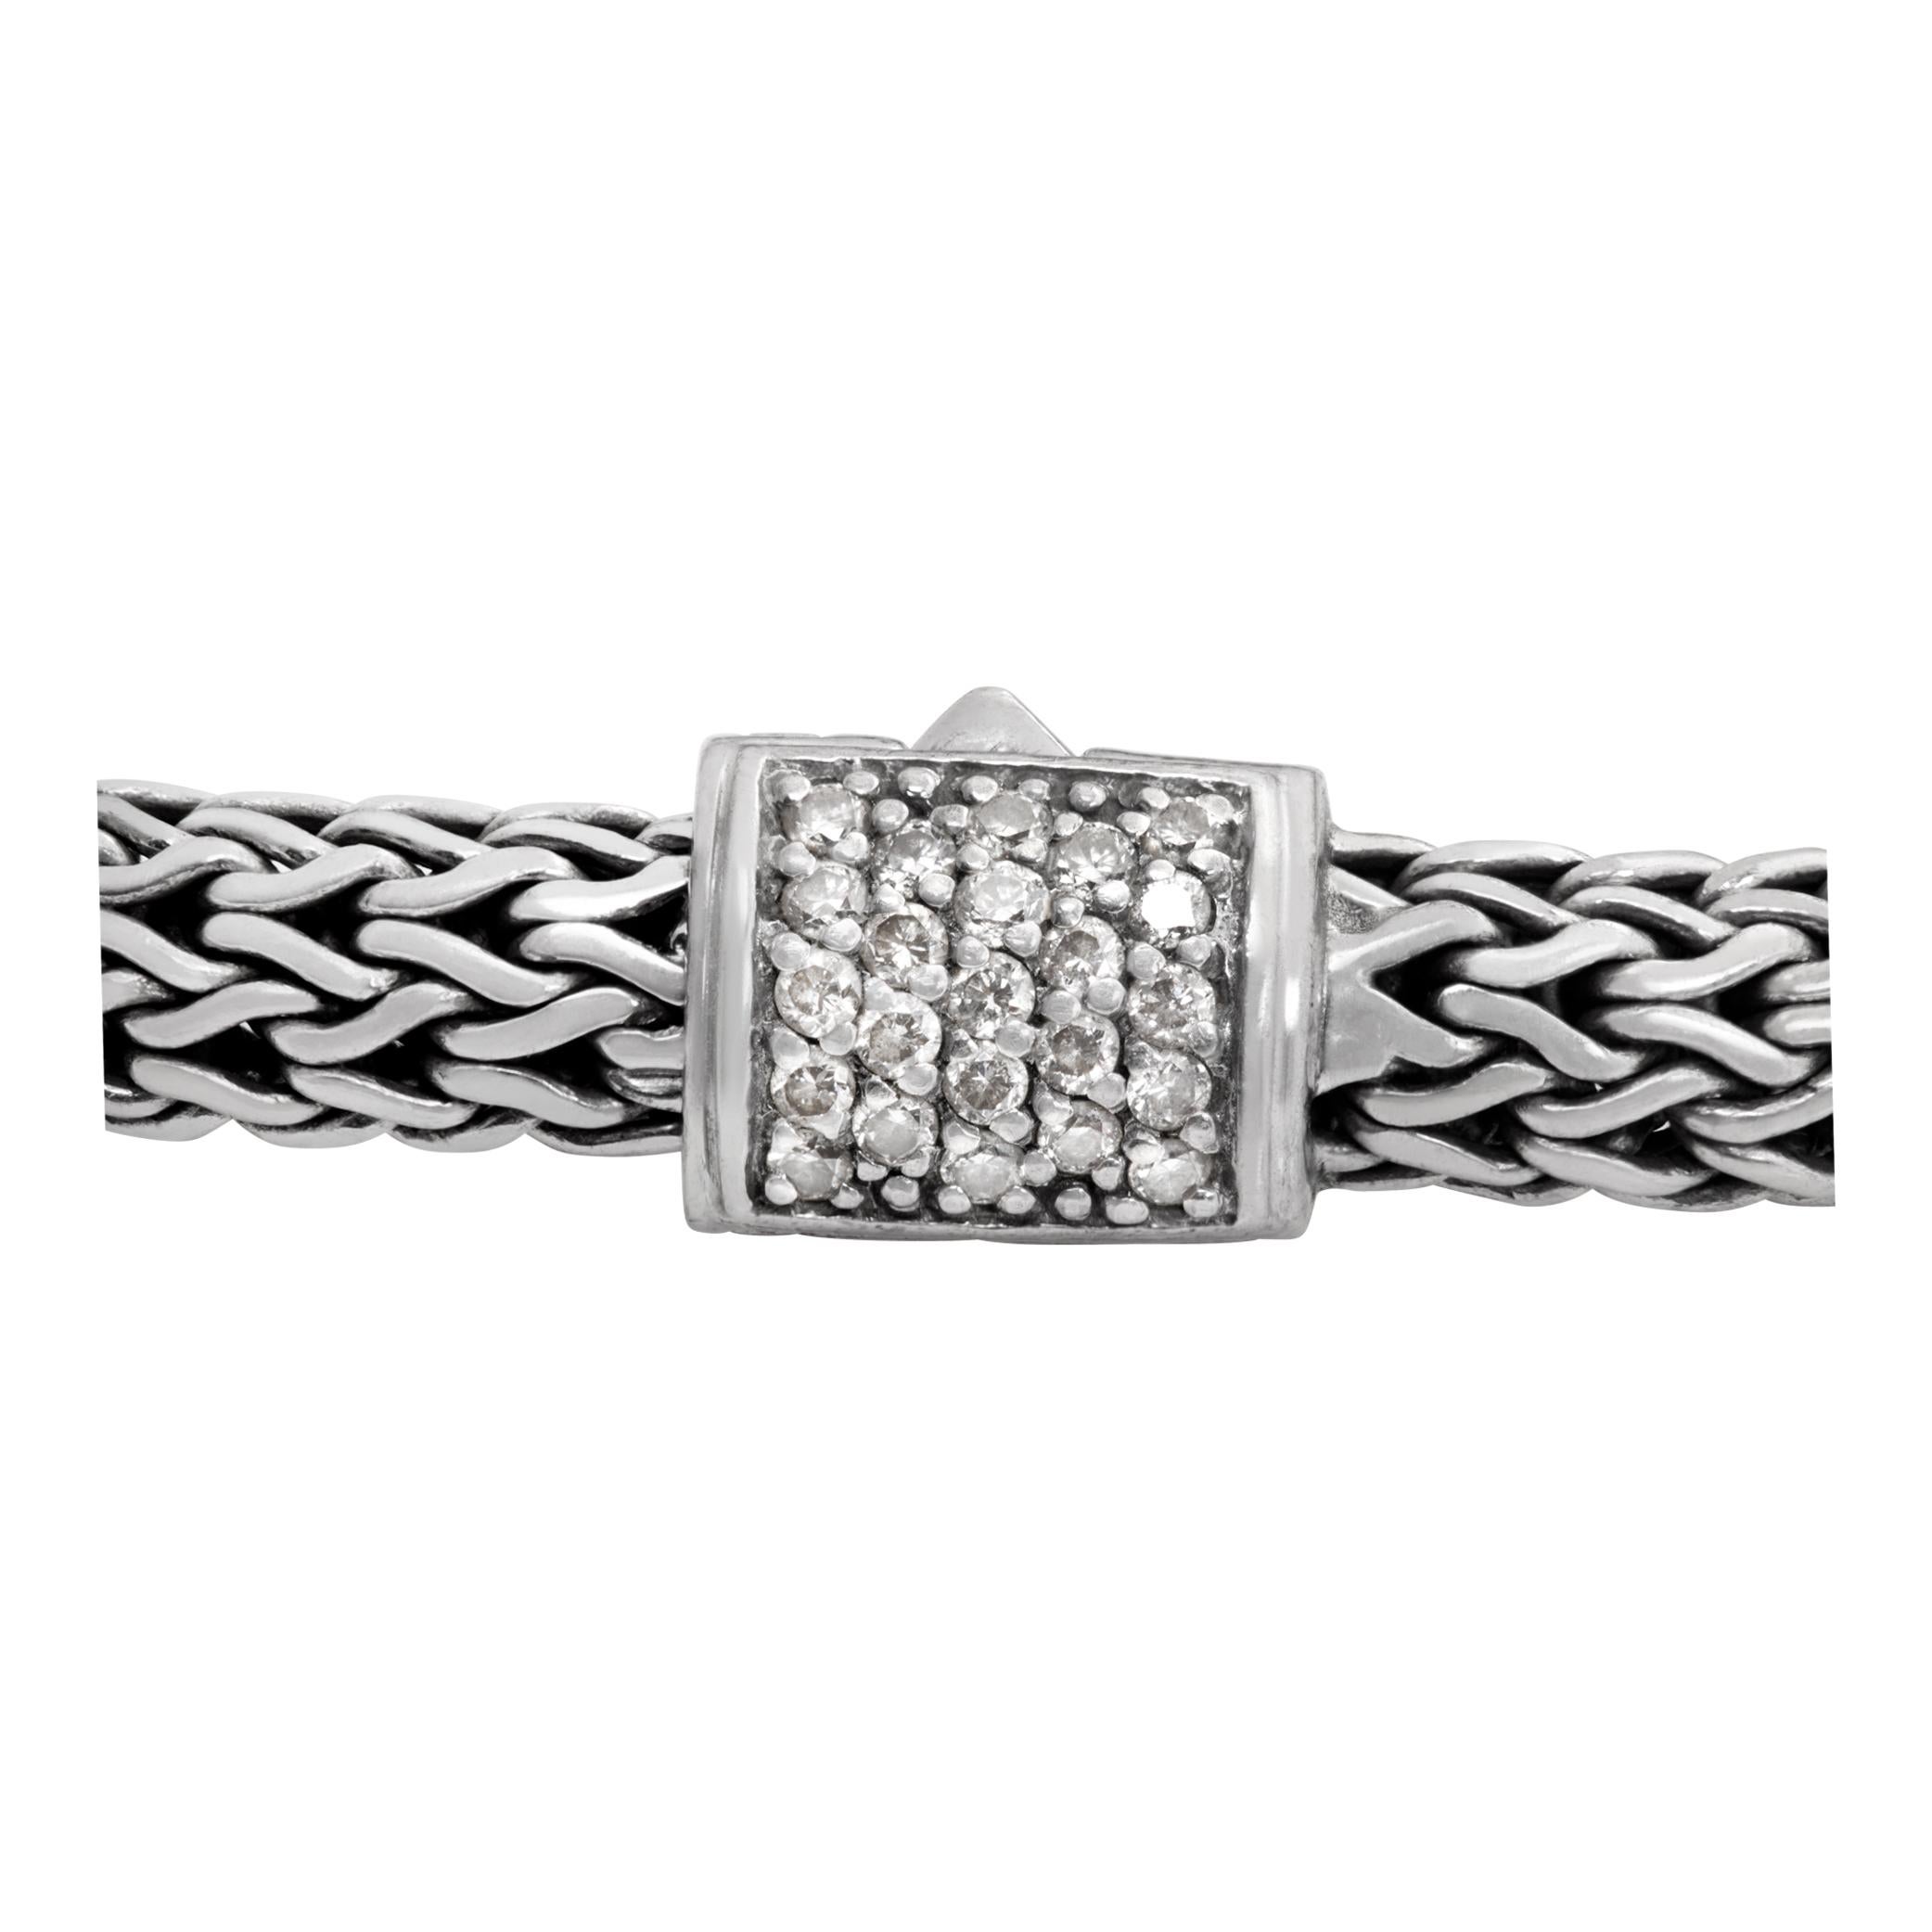 John Hardy diamond sterling silver bracelet In Excellent Condition For Sale In Surfside, FL